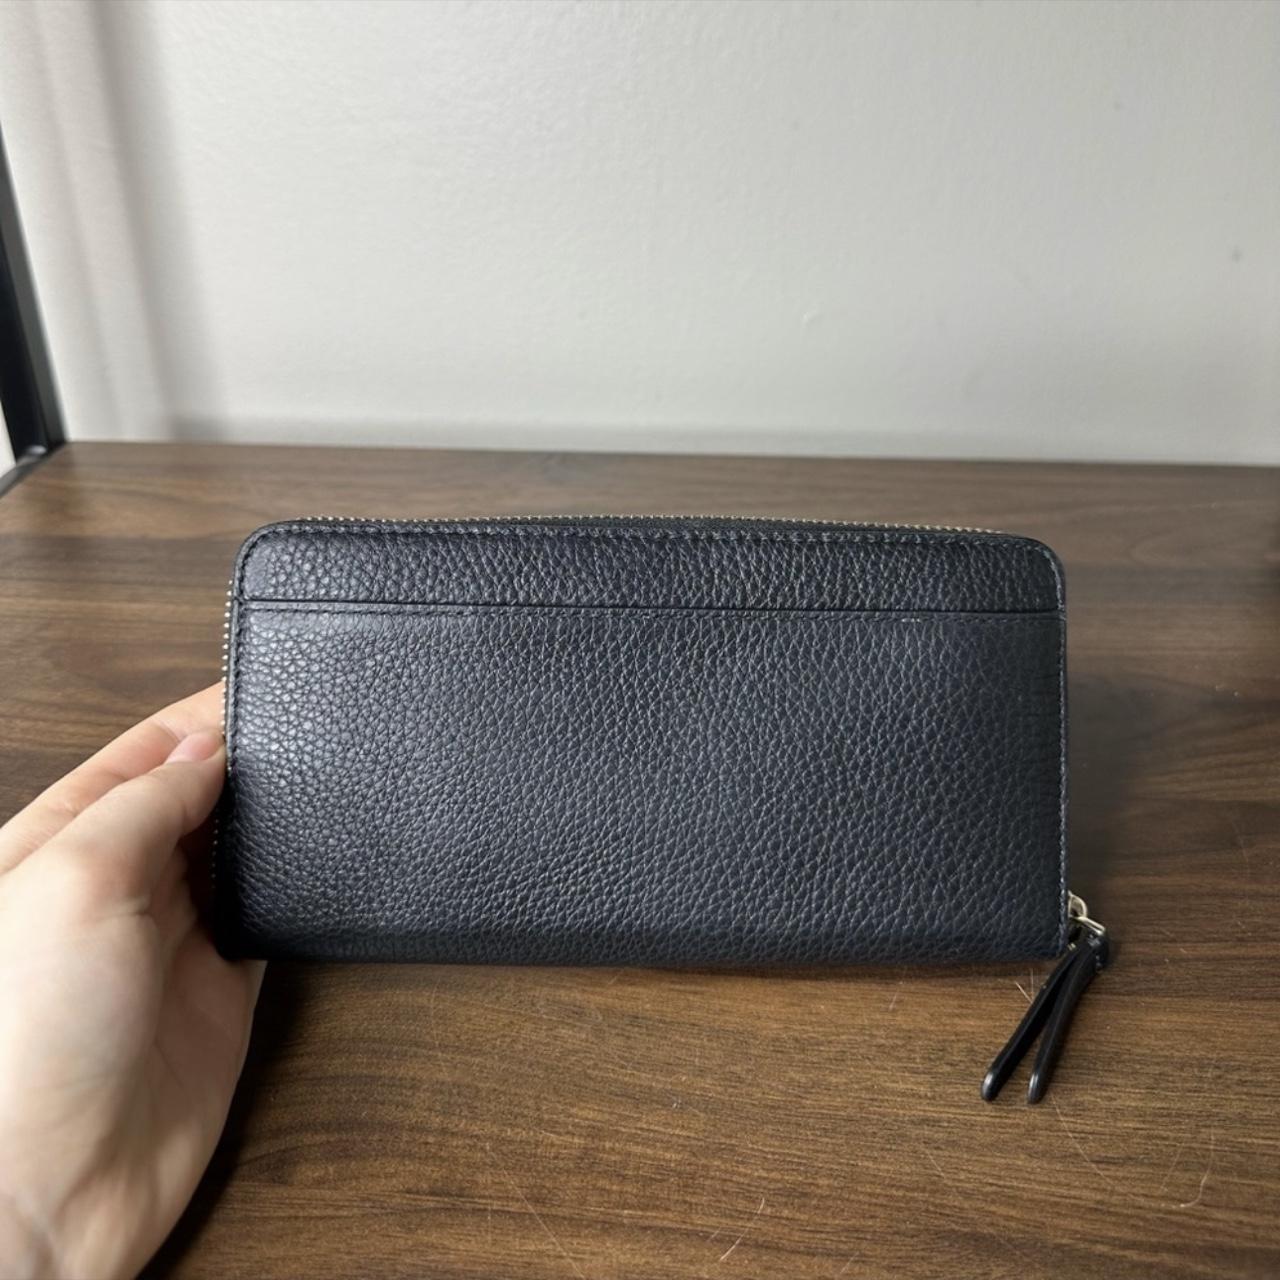 Kate Spade New York Women's Black Wallet-purses | Depop